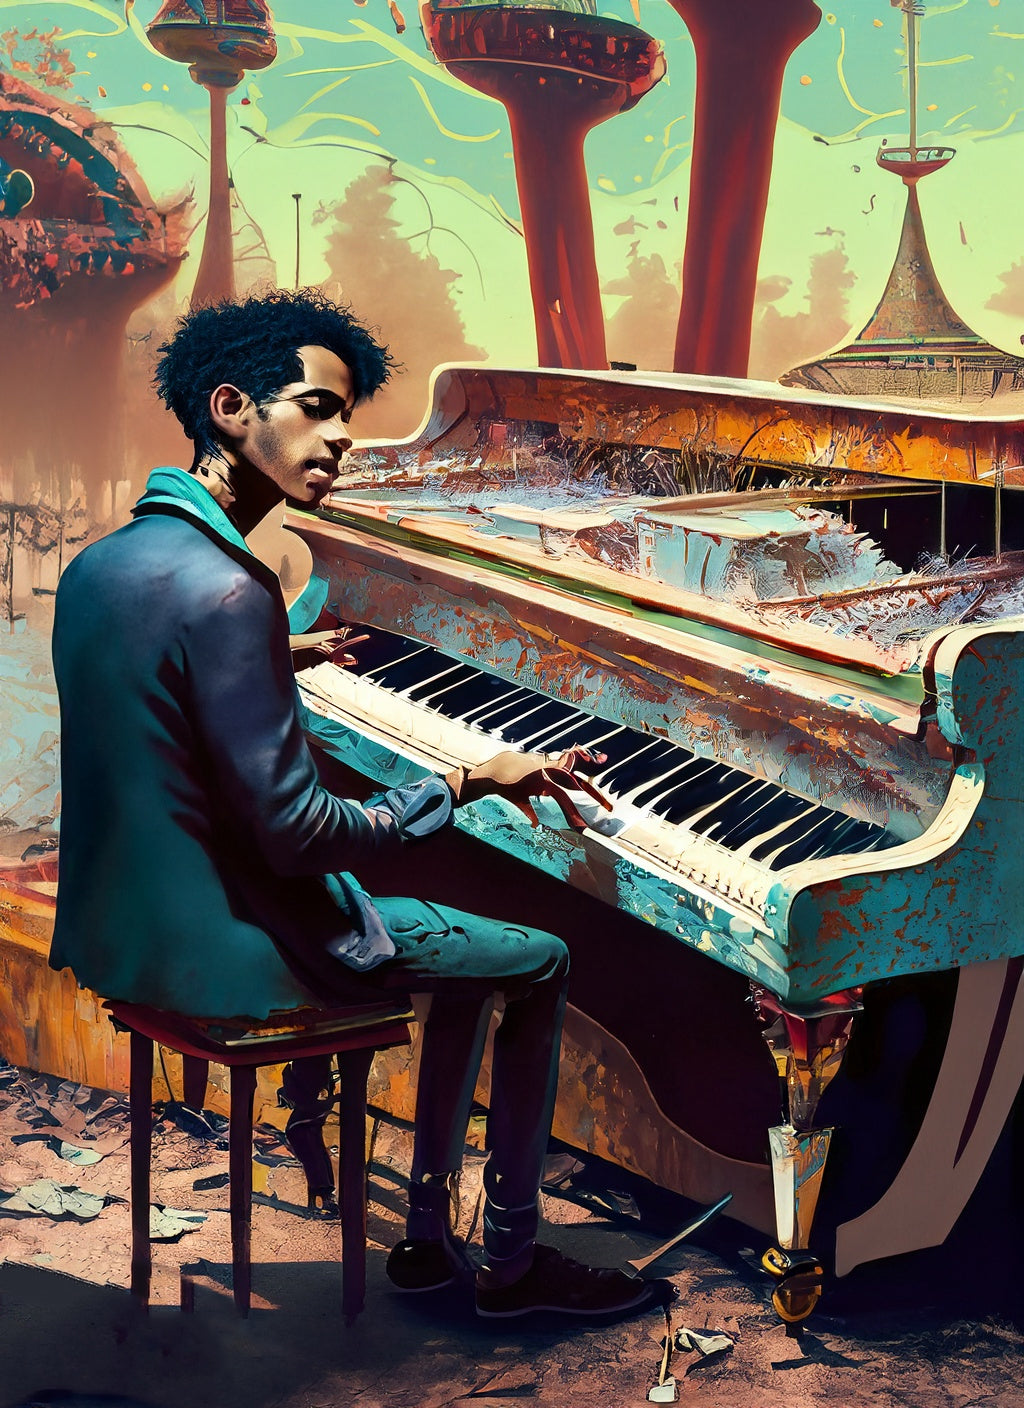 Man Playing Piano in Futuristic Cityscape Digital Illustration Art Print